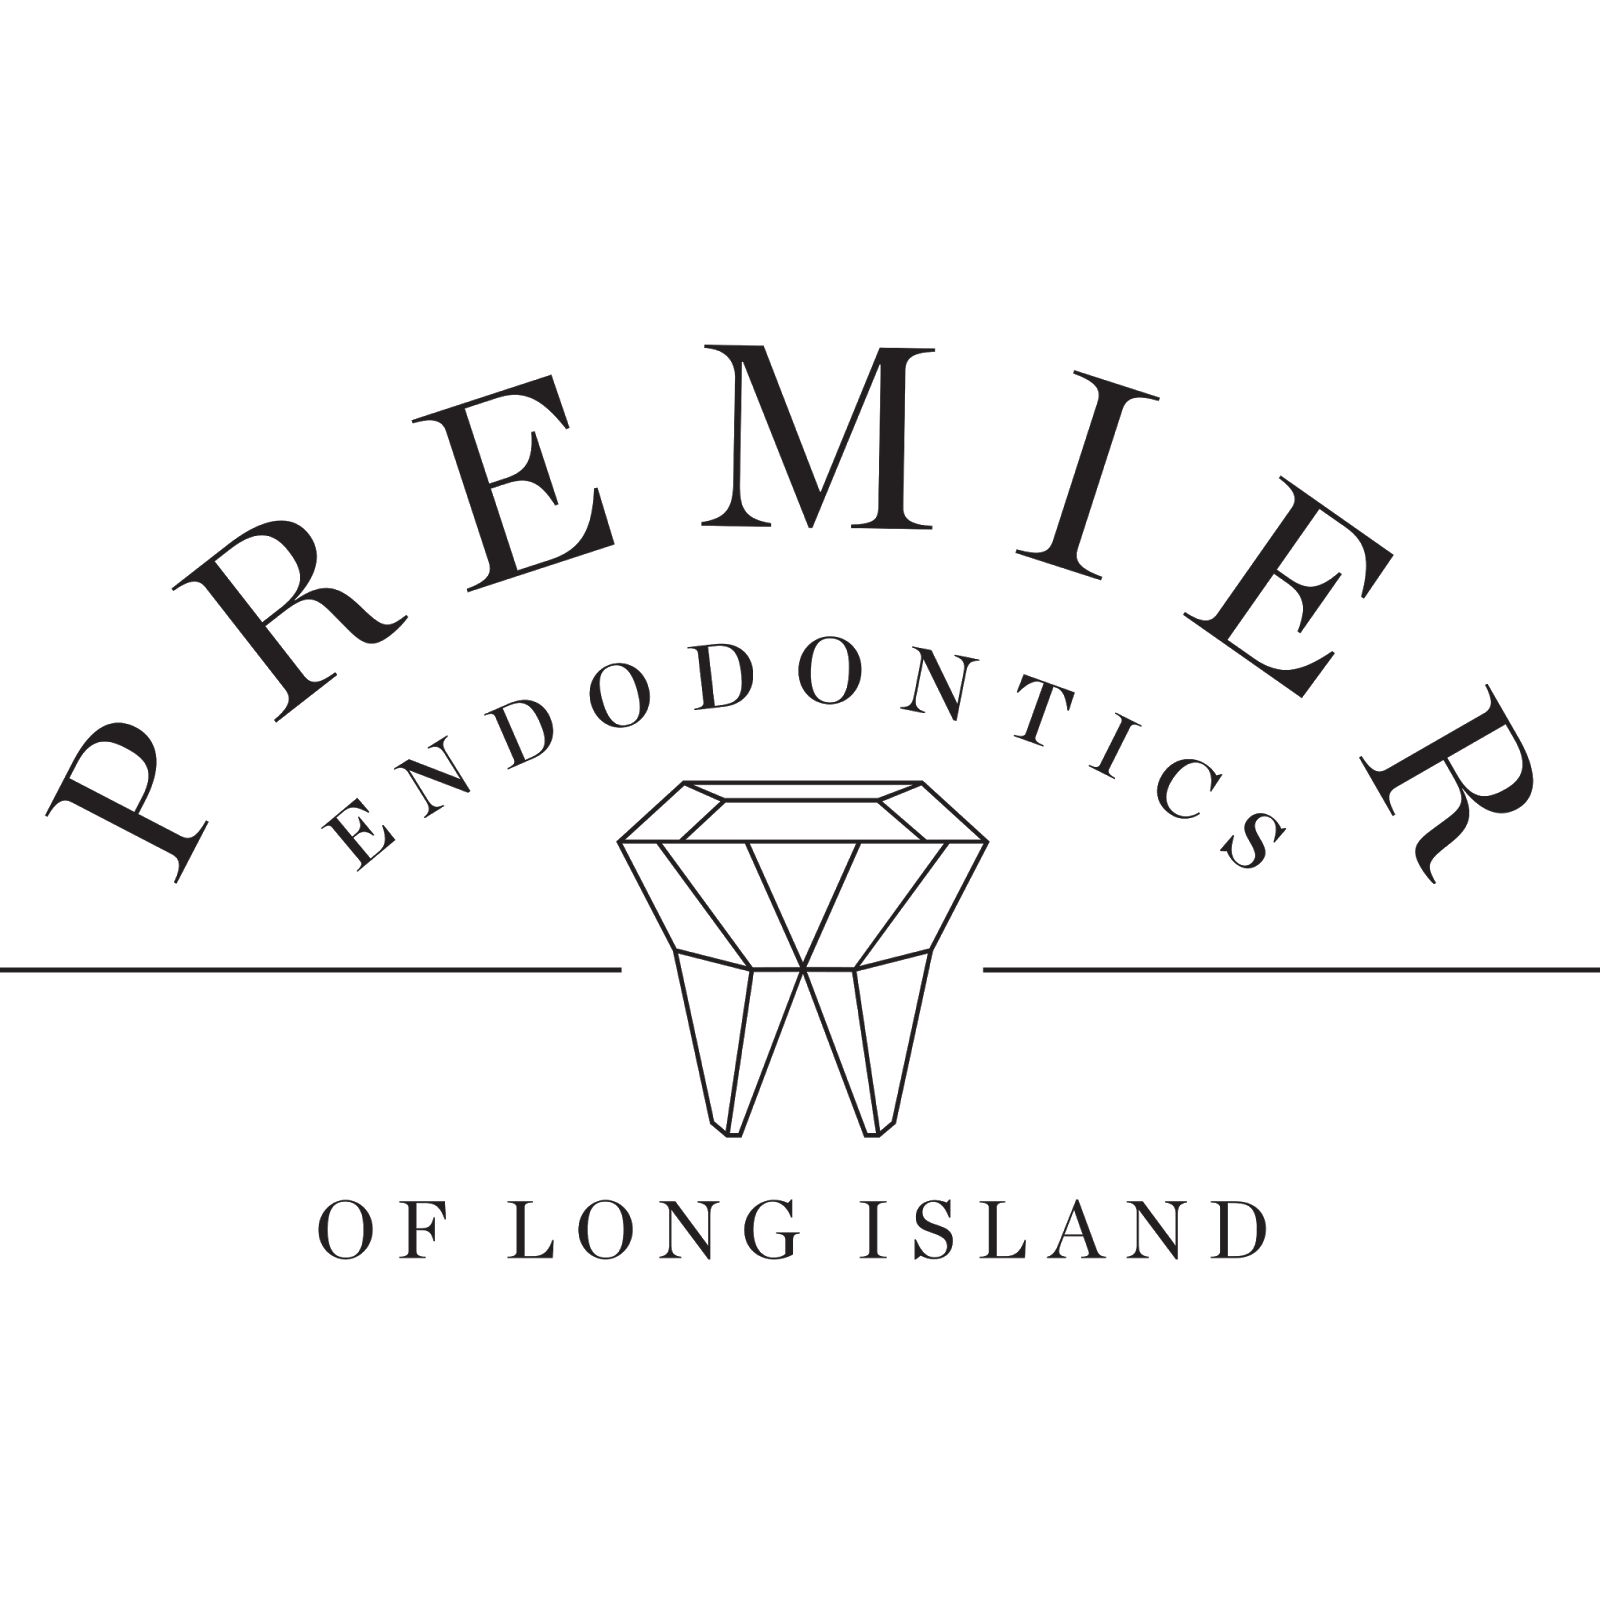 Photo of Premier Endodontics Long Island - Garden City in Garden City, New York, United States - 1 Picture of Point of interest, Establishment, Health, Dentist